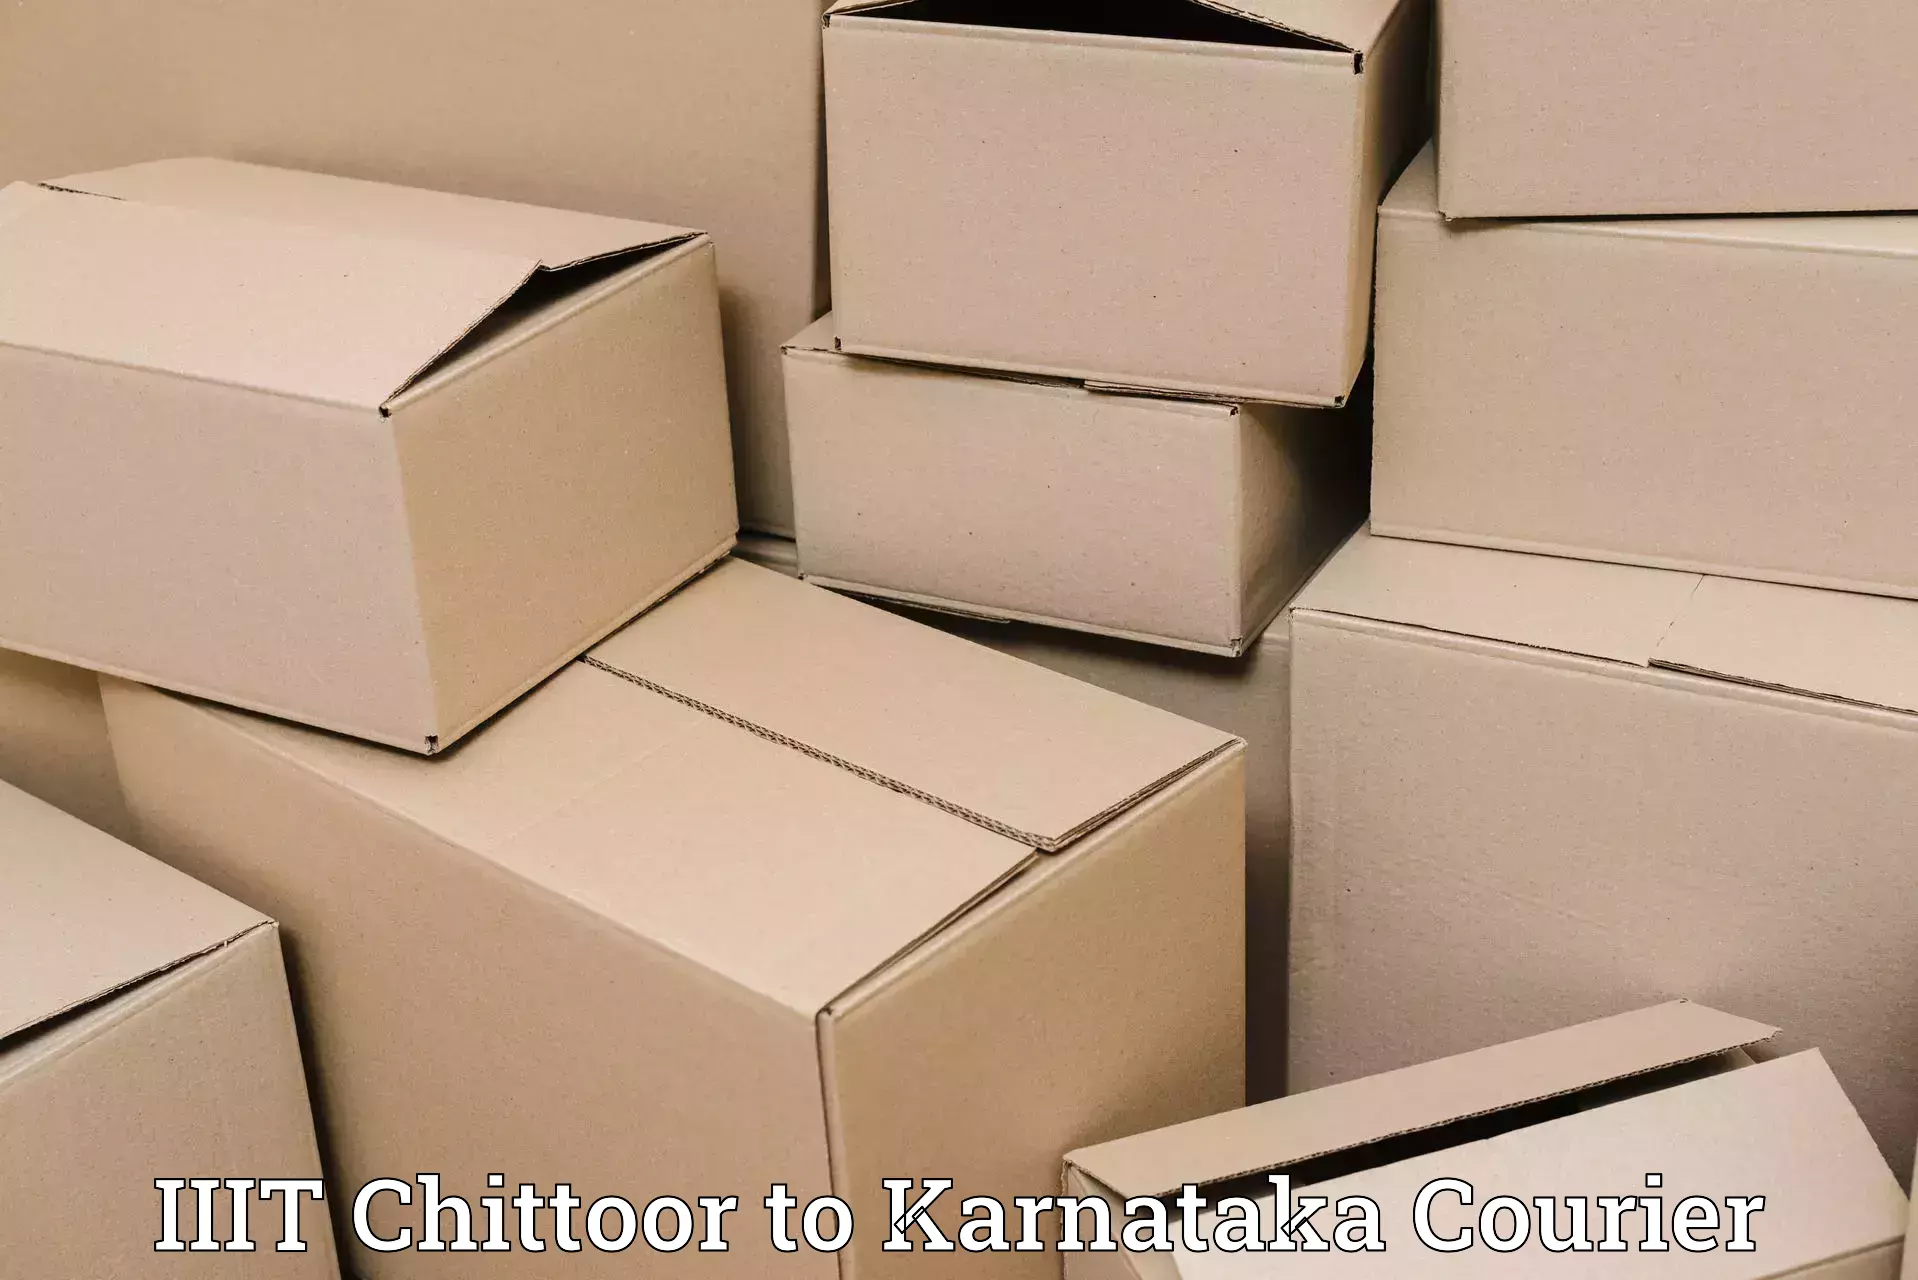 User-friendly courier app IIIT Chittoor to Gadag